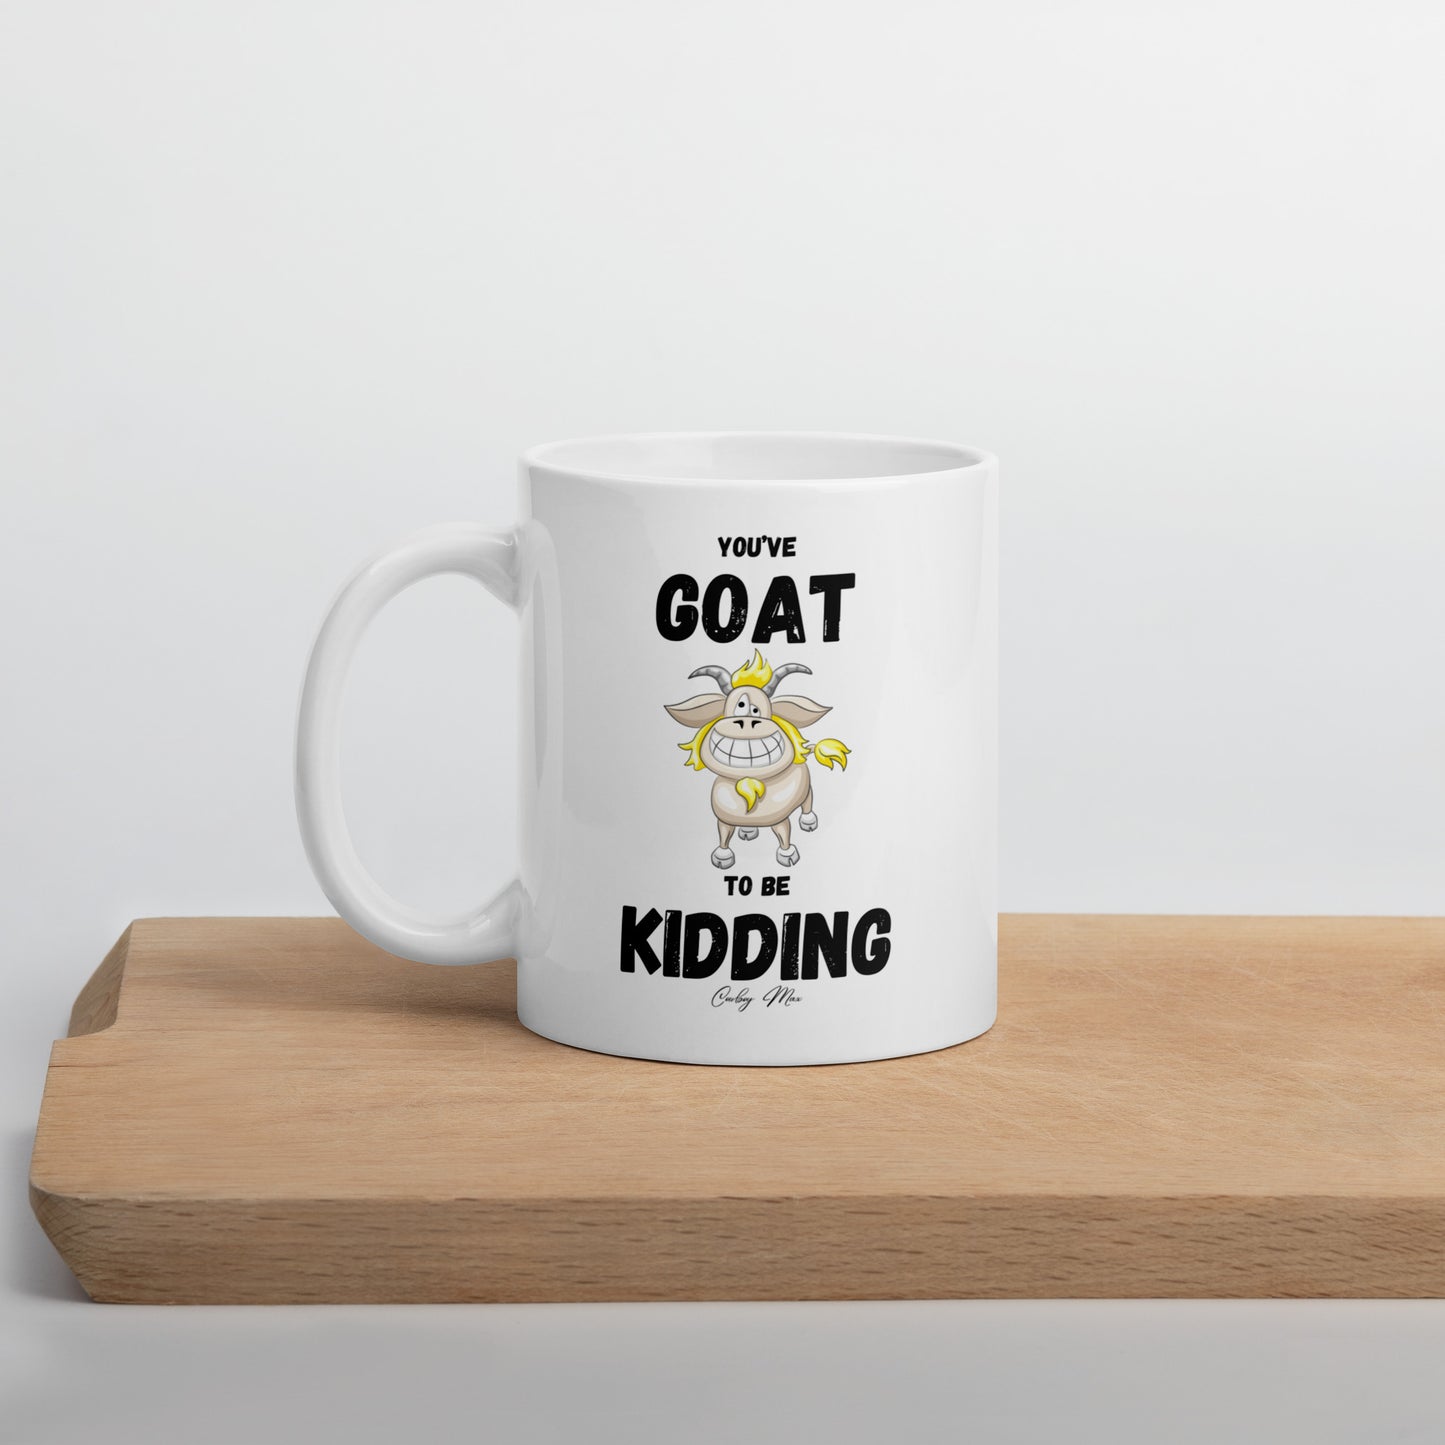 n. You’ve GOAT To Be Kidding: White glossy mug